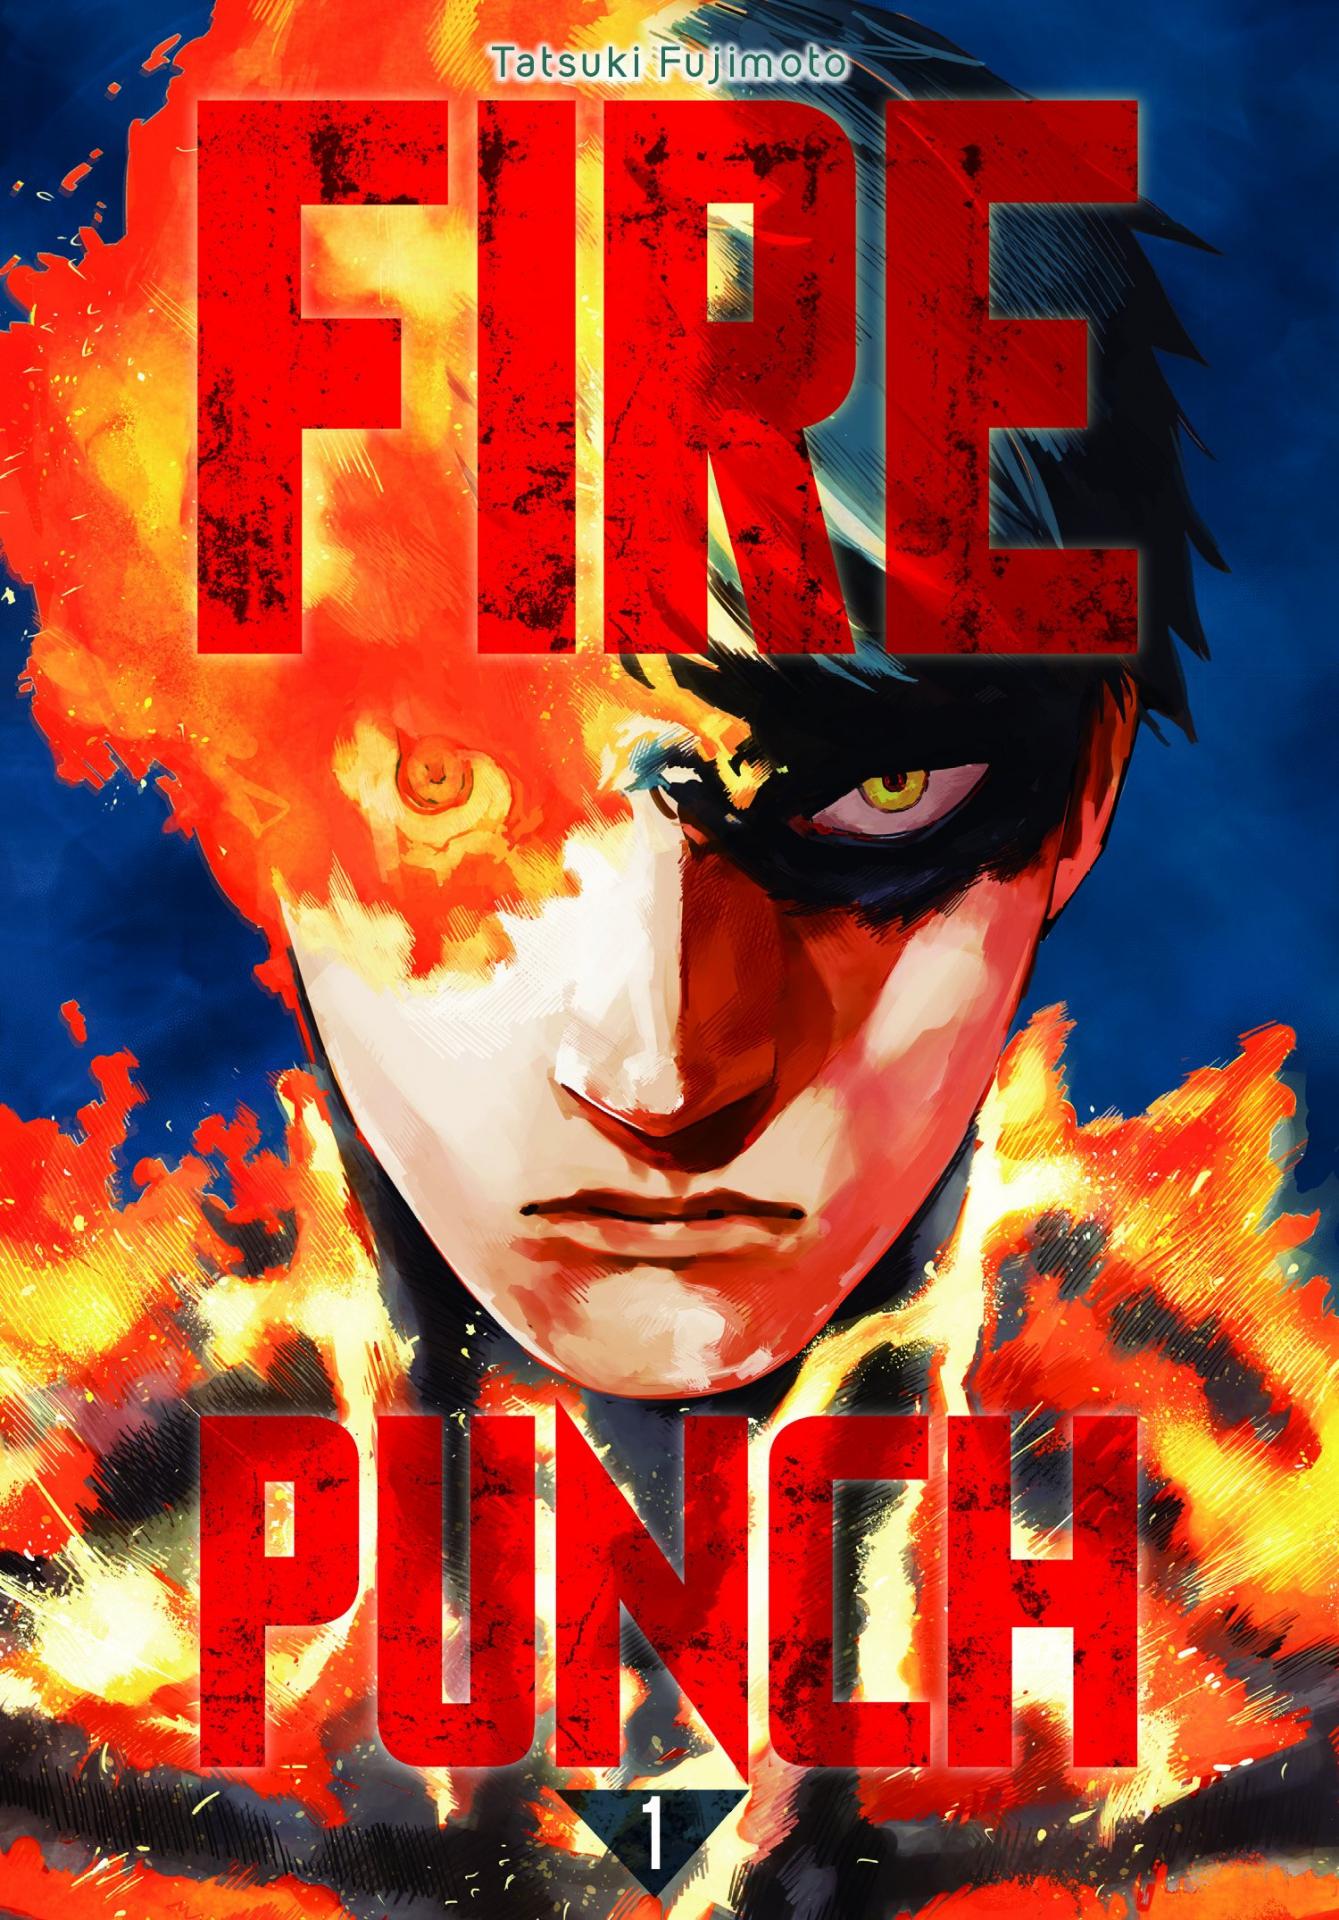 Fire punch manga volume 1 simple 273001